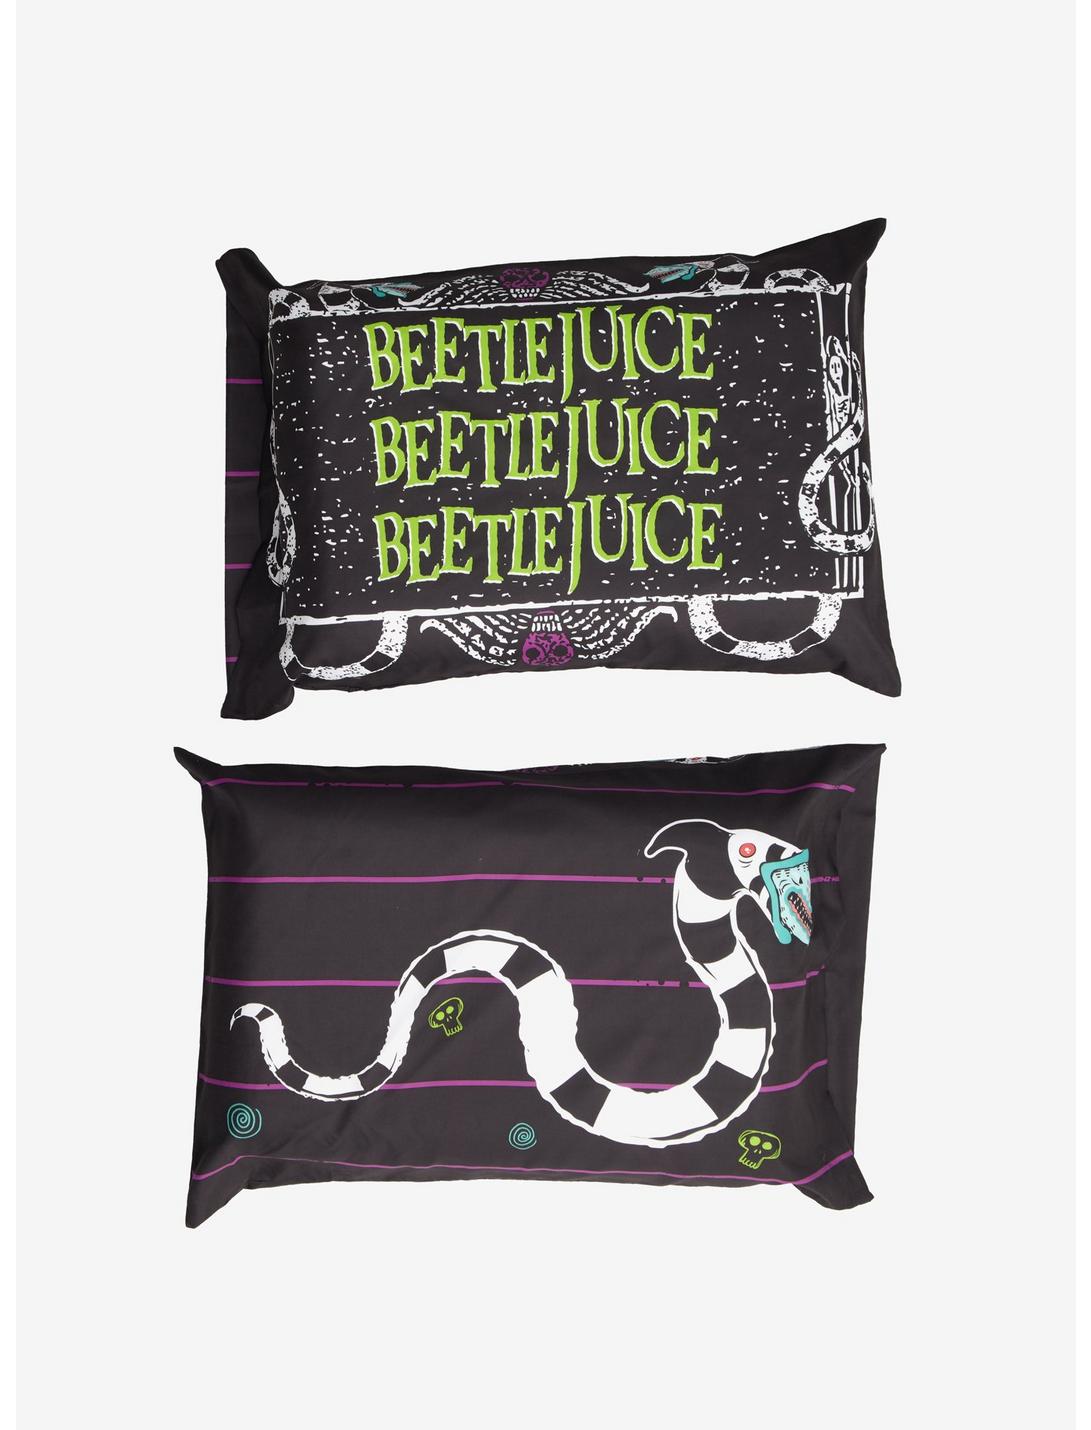 Beetlejuice Name & Sandworm Pillowcase Set, , hi-res